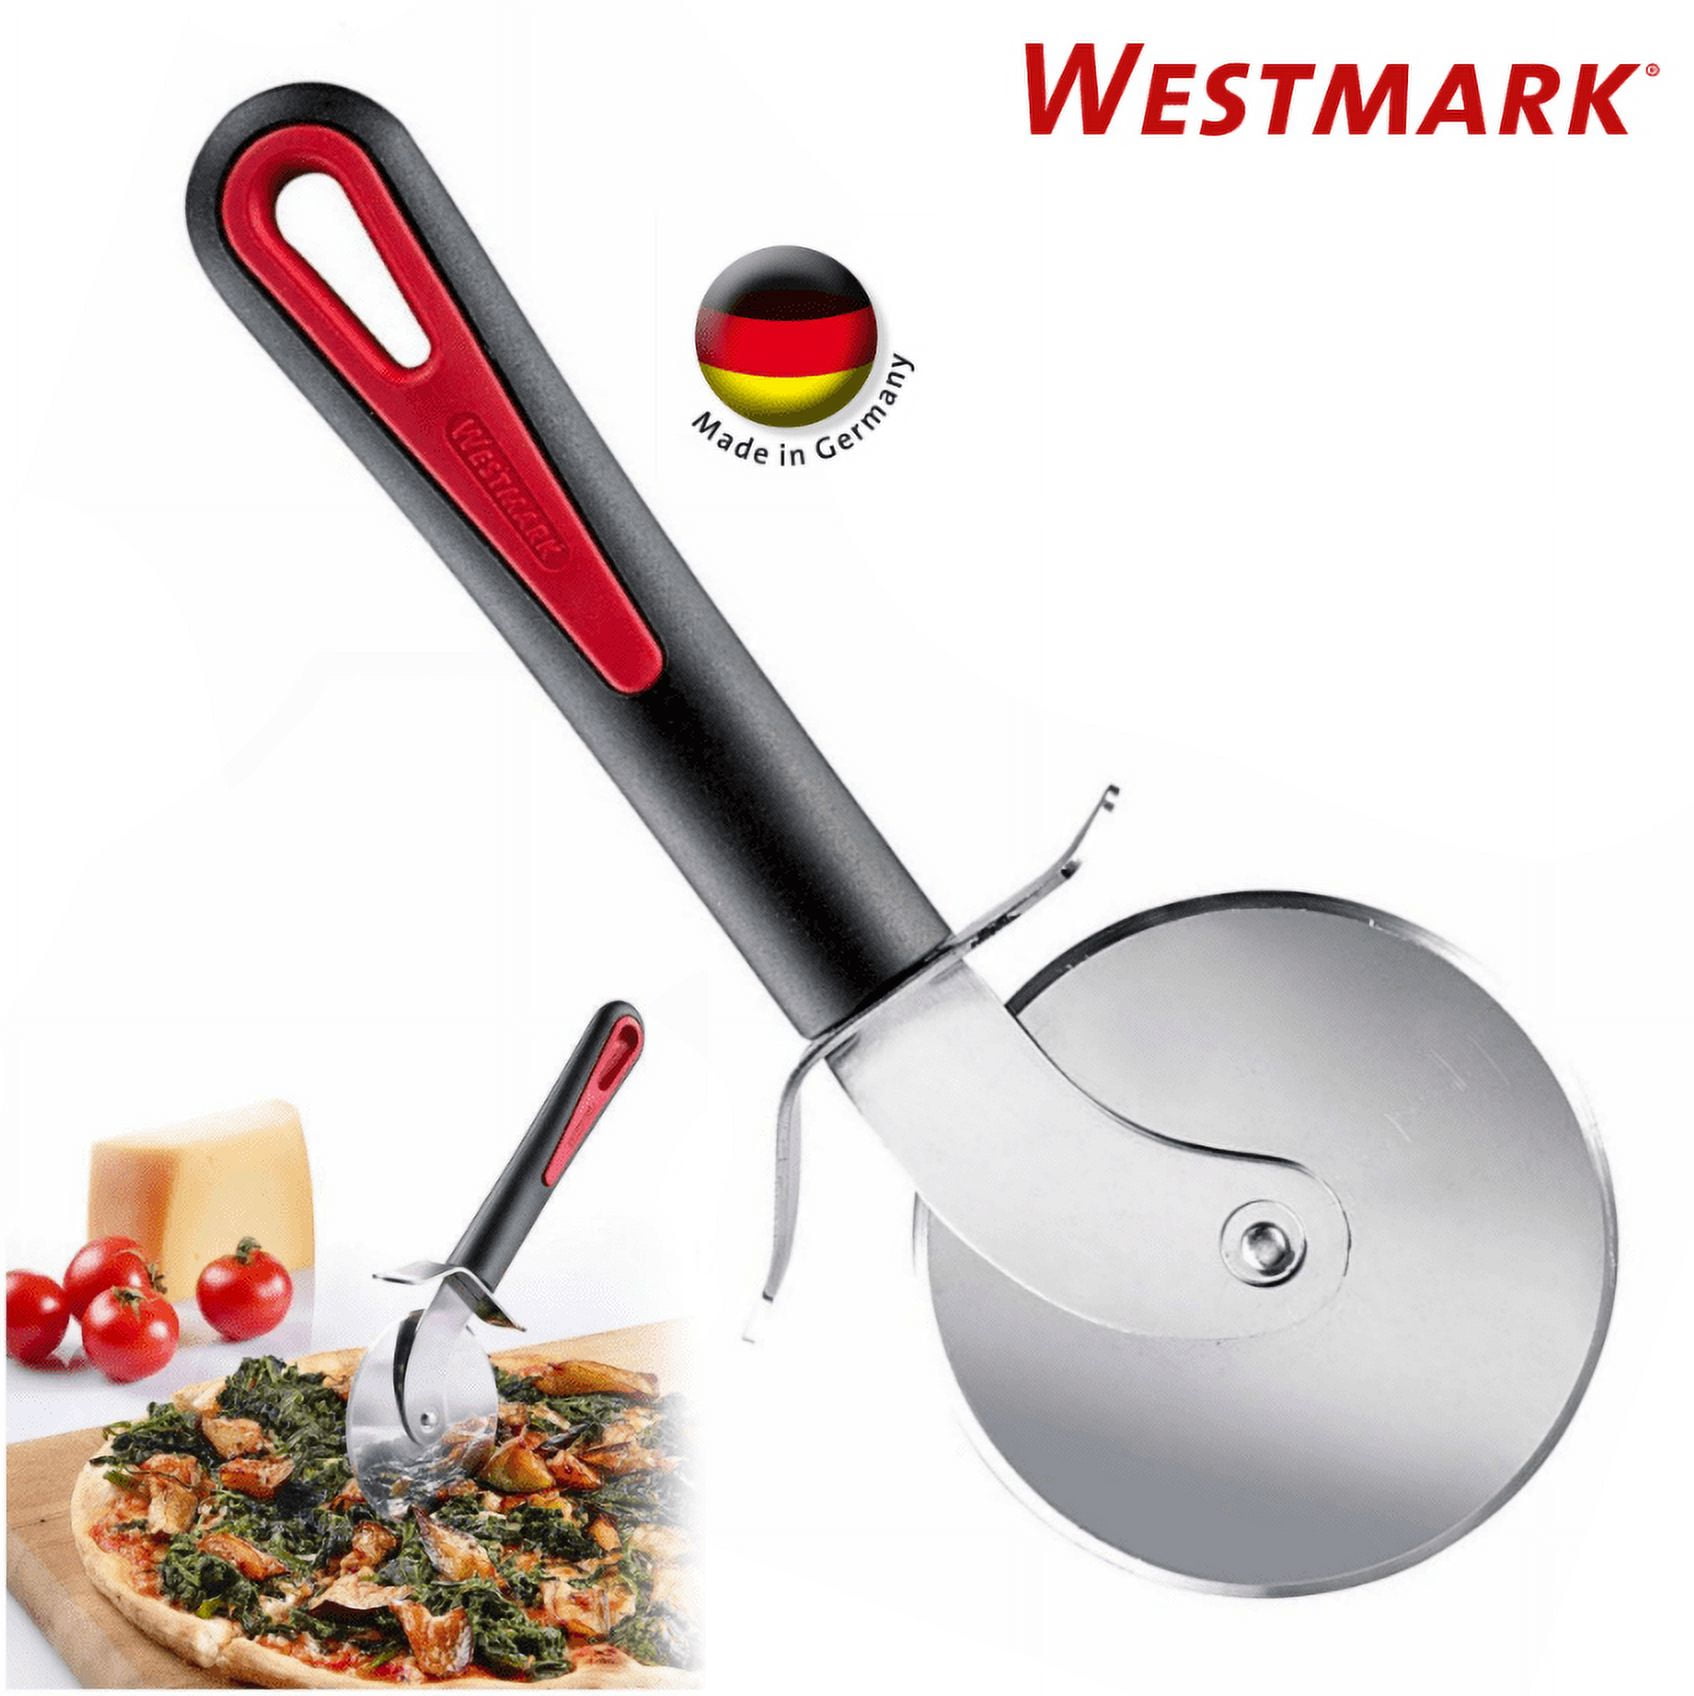 Westmark German Heavy Duty Pizza Slicer Red Steel inch 3 Wheel Cutter Stainless